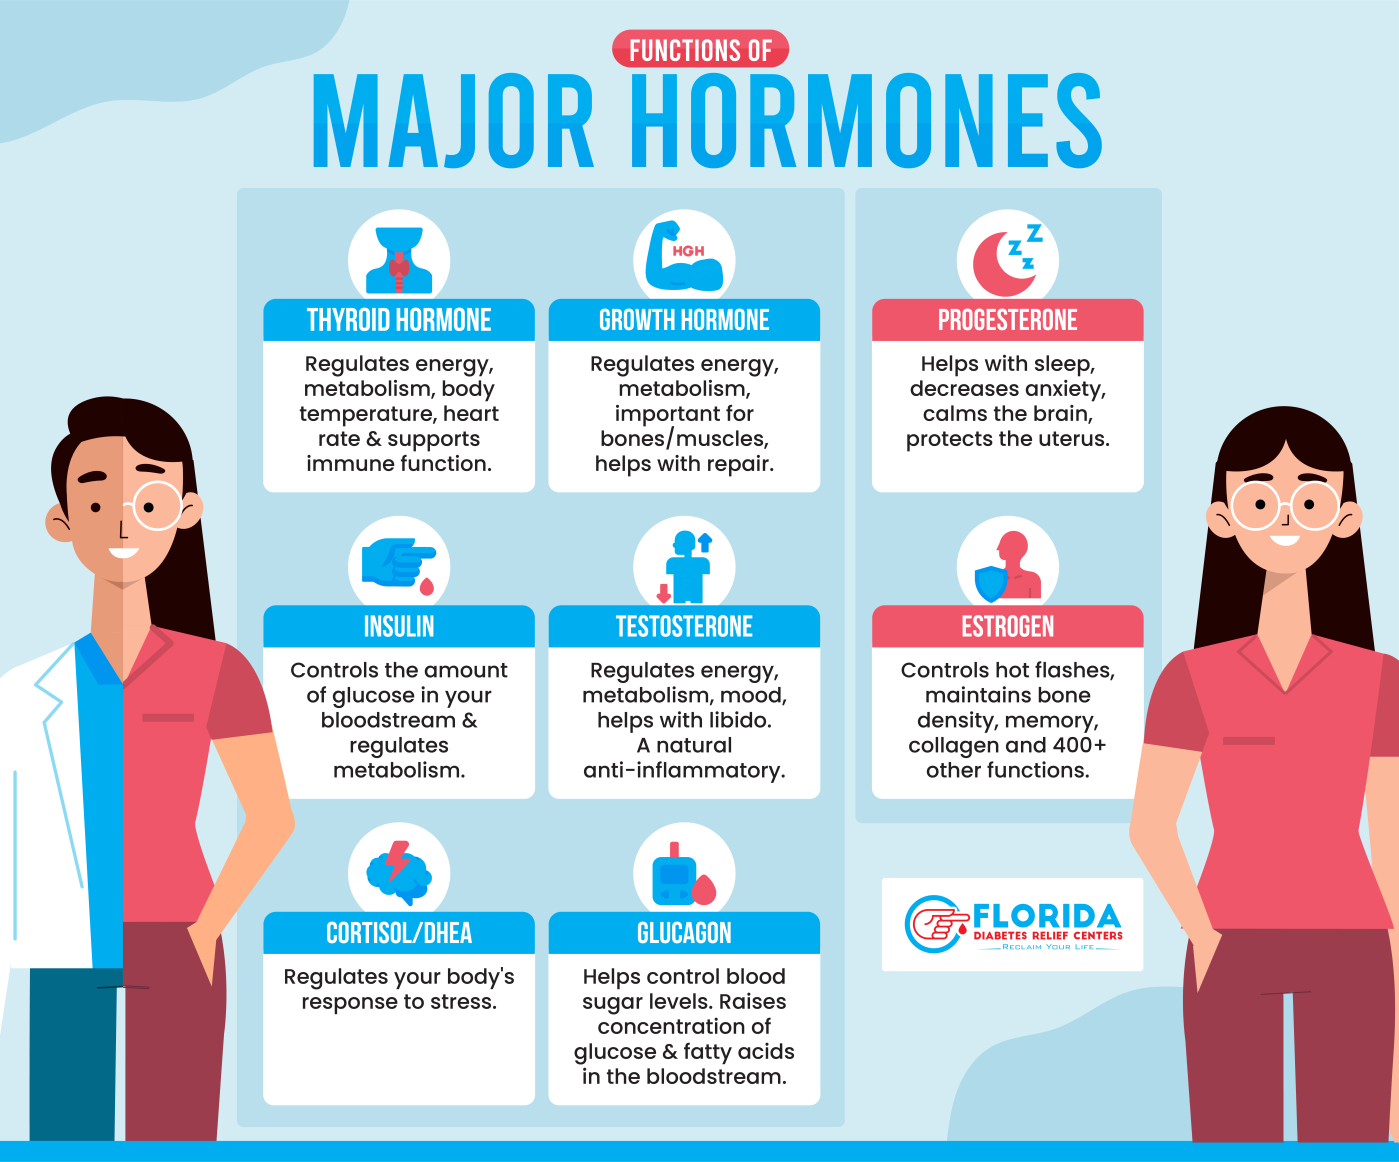 Hormones - Florida Diabetes Relief Centers